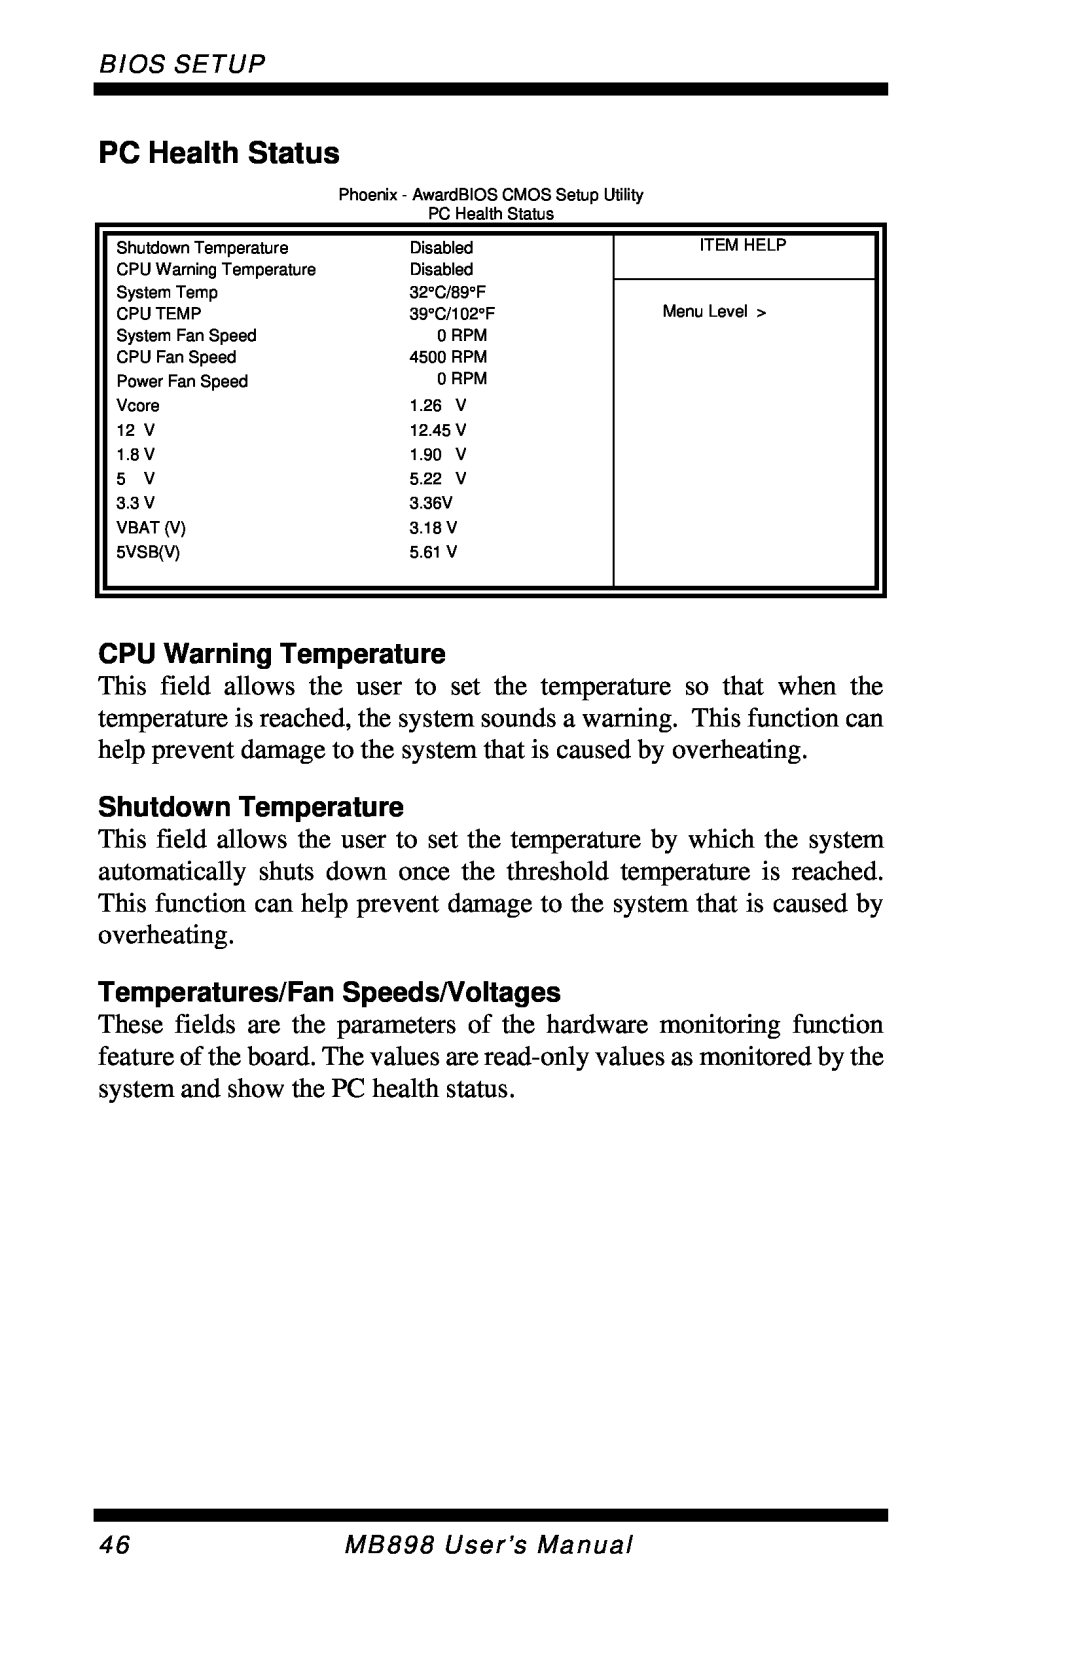 Intel MB898F, MB898RF PC Health Status, CPU Warning Temperature, Shutdown Temperature, Temperatures/Fan Speeds/Voltages 